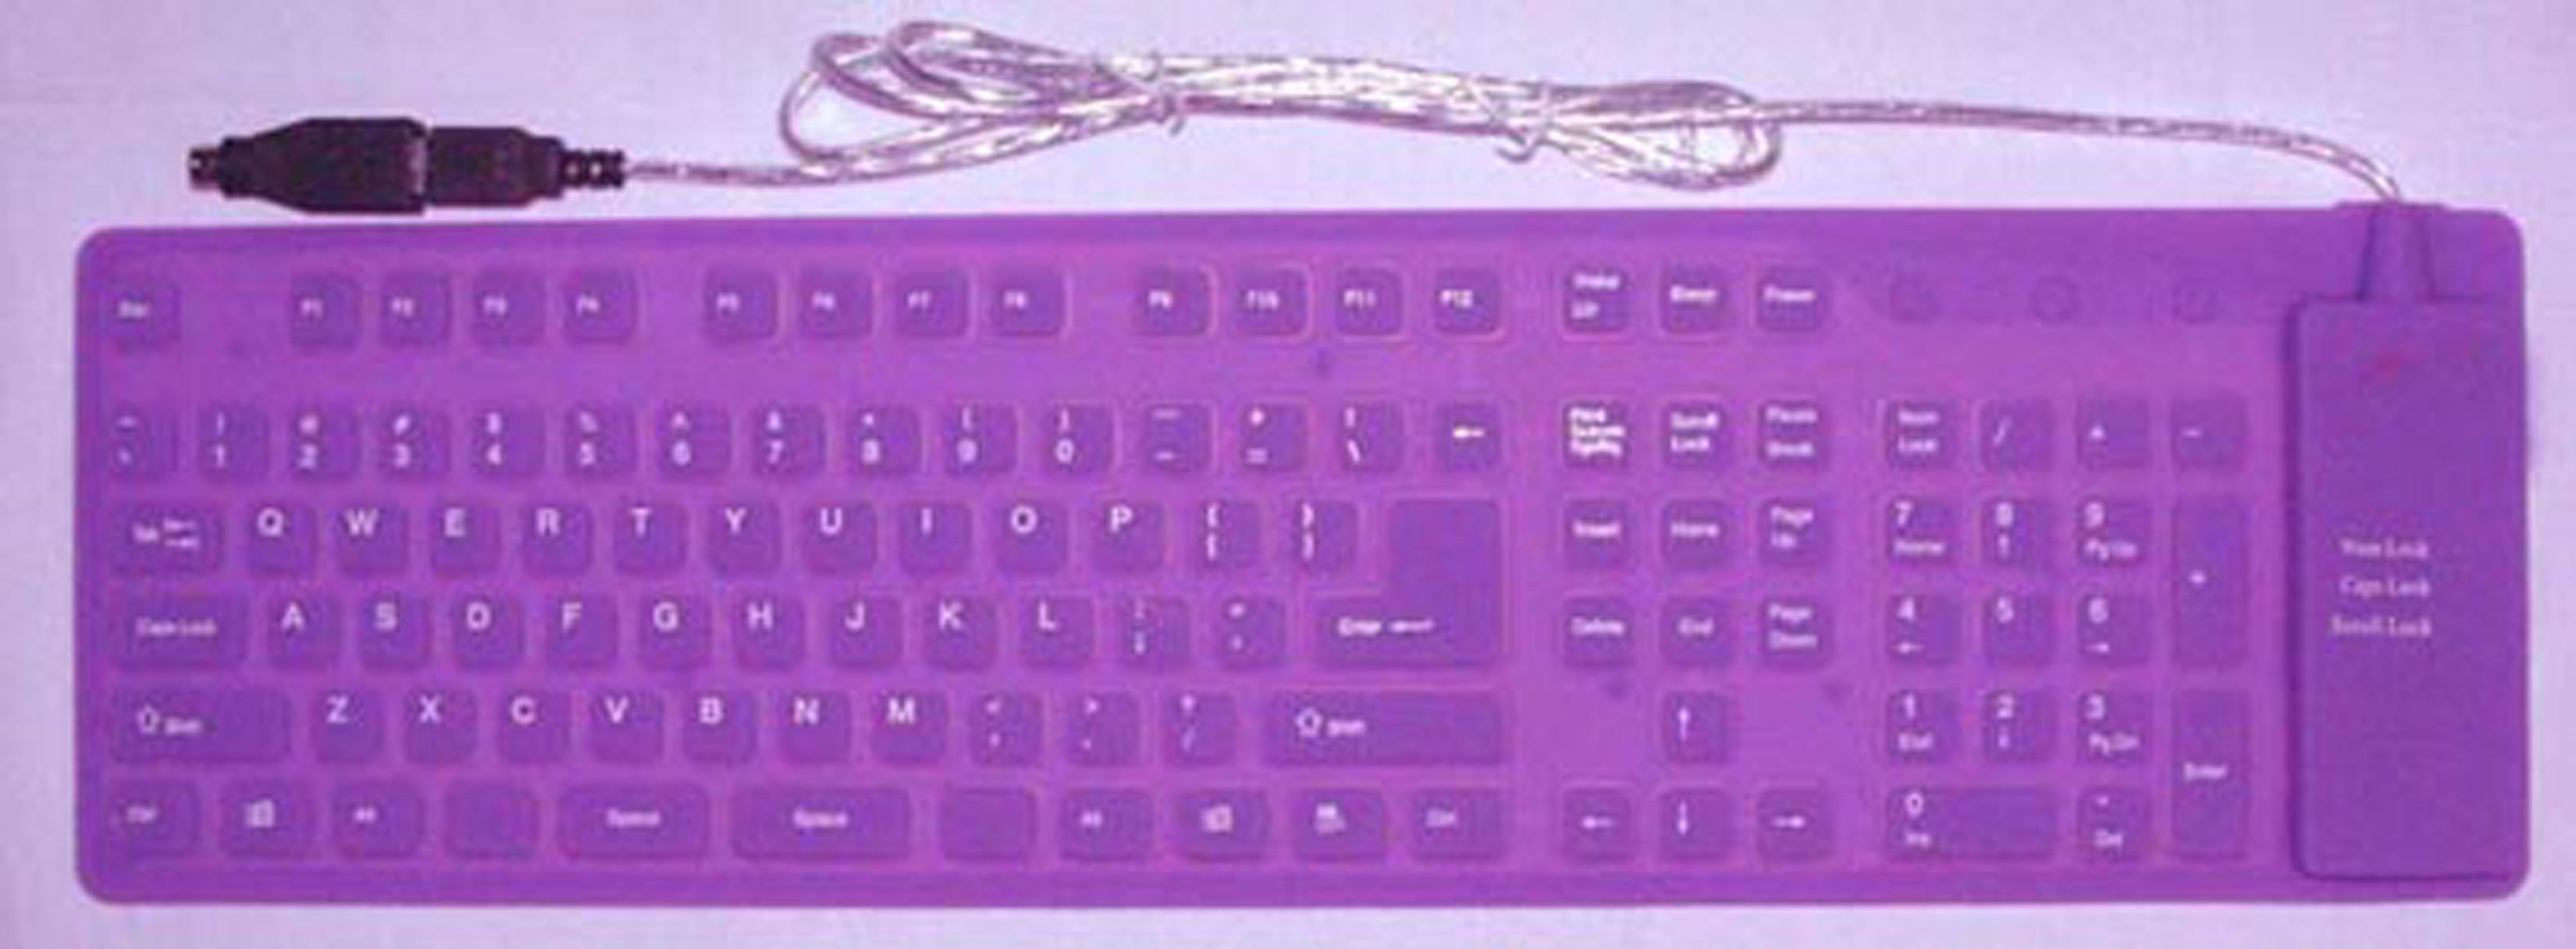 109 Keys Series Keyboard